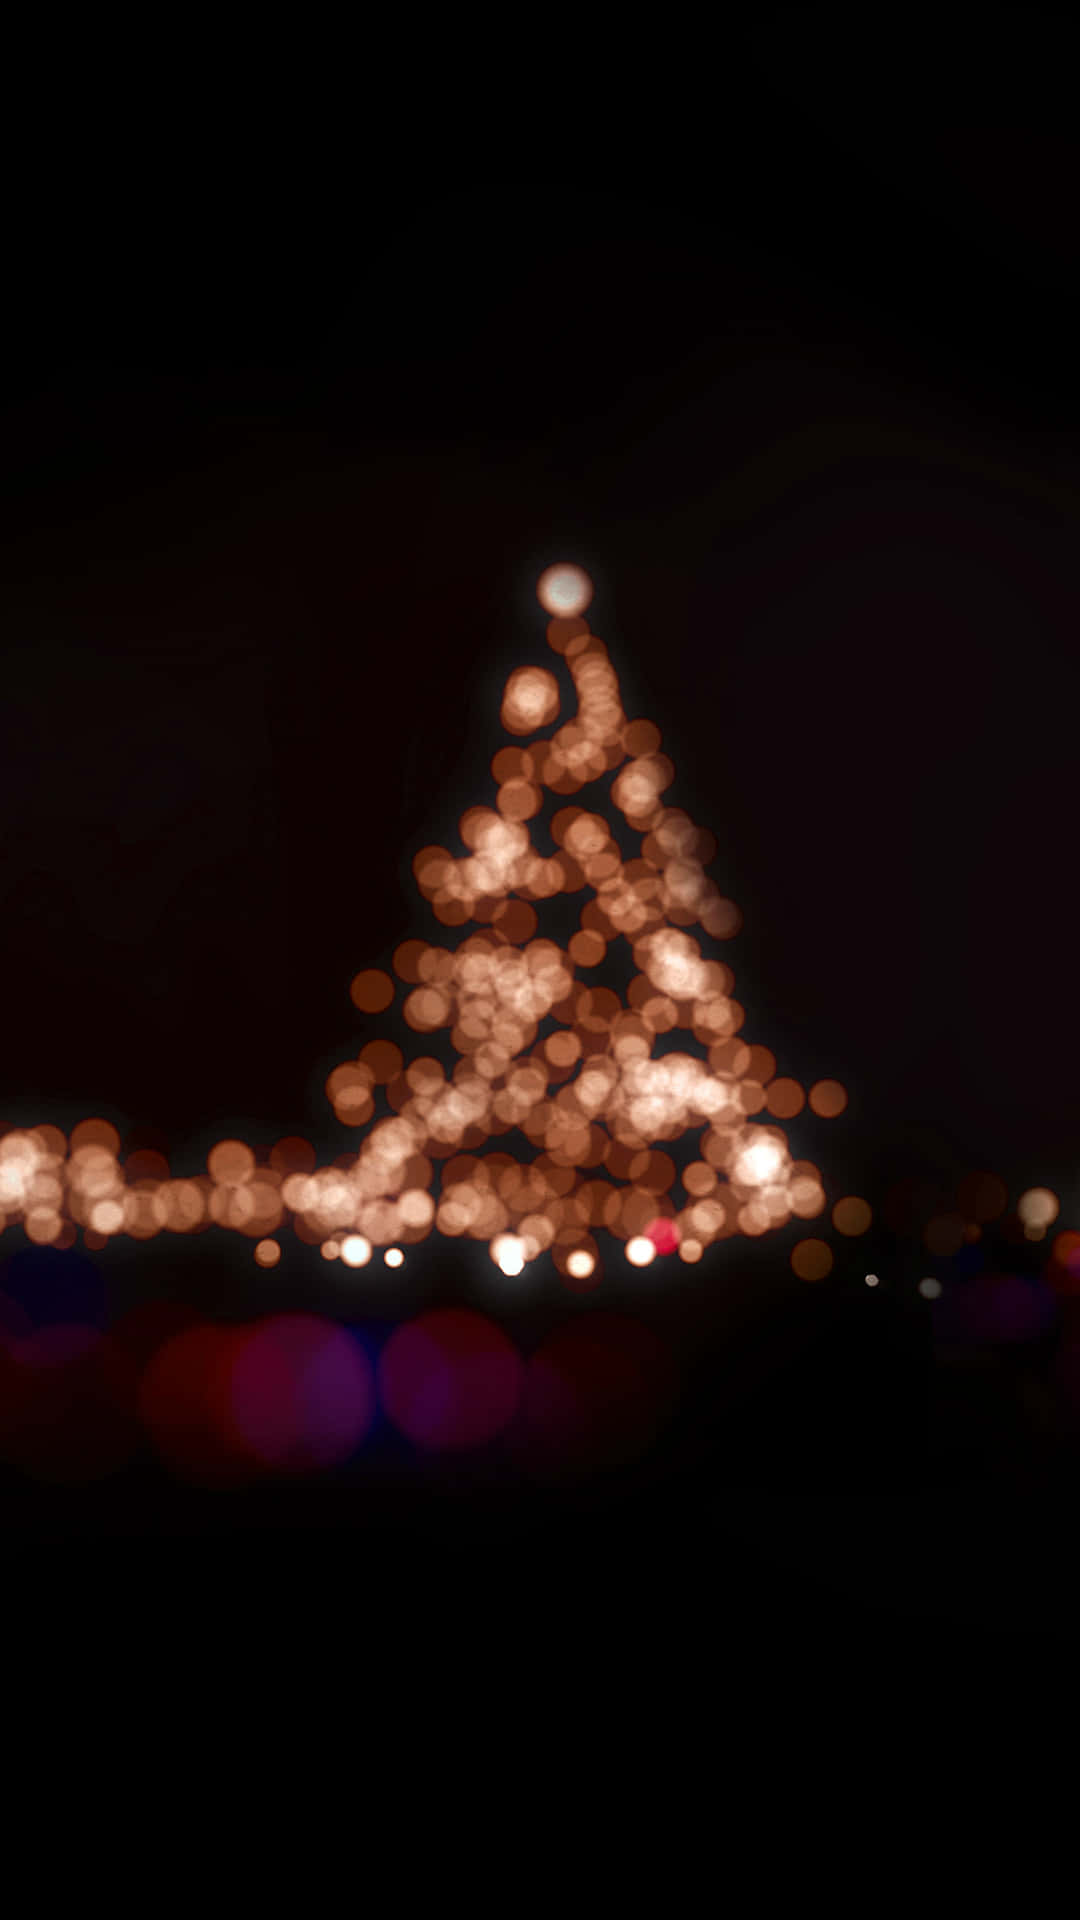 Iphone Christmas Aesthetic Tree Blurred Wallpaper